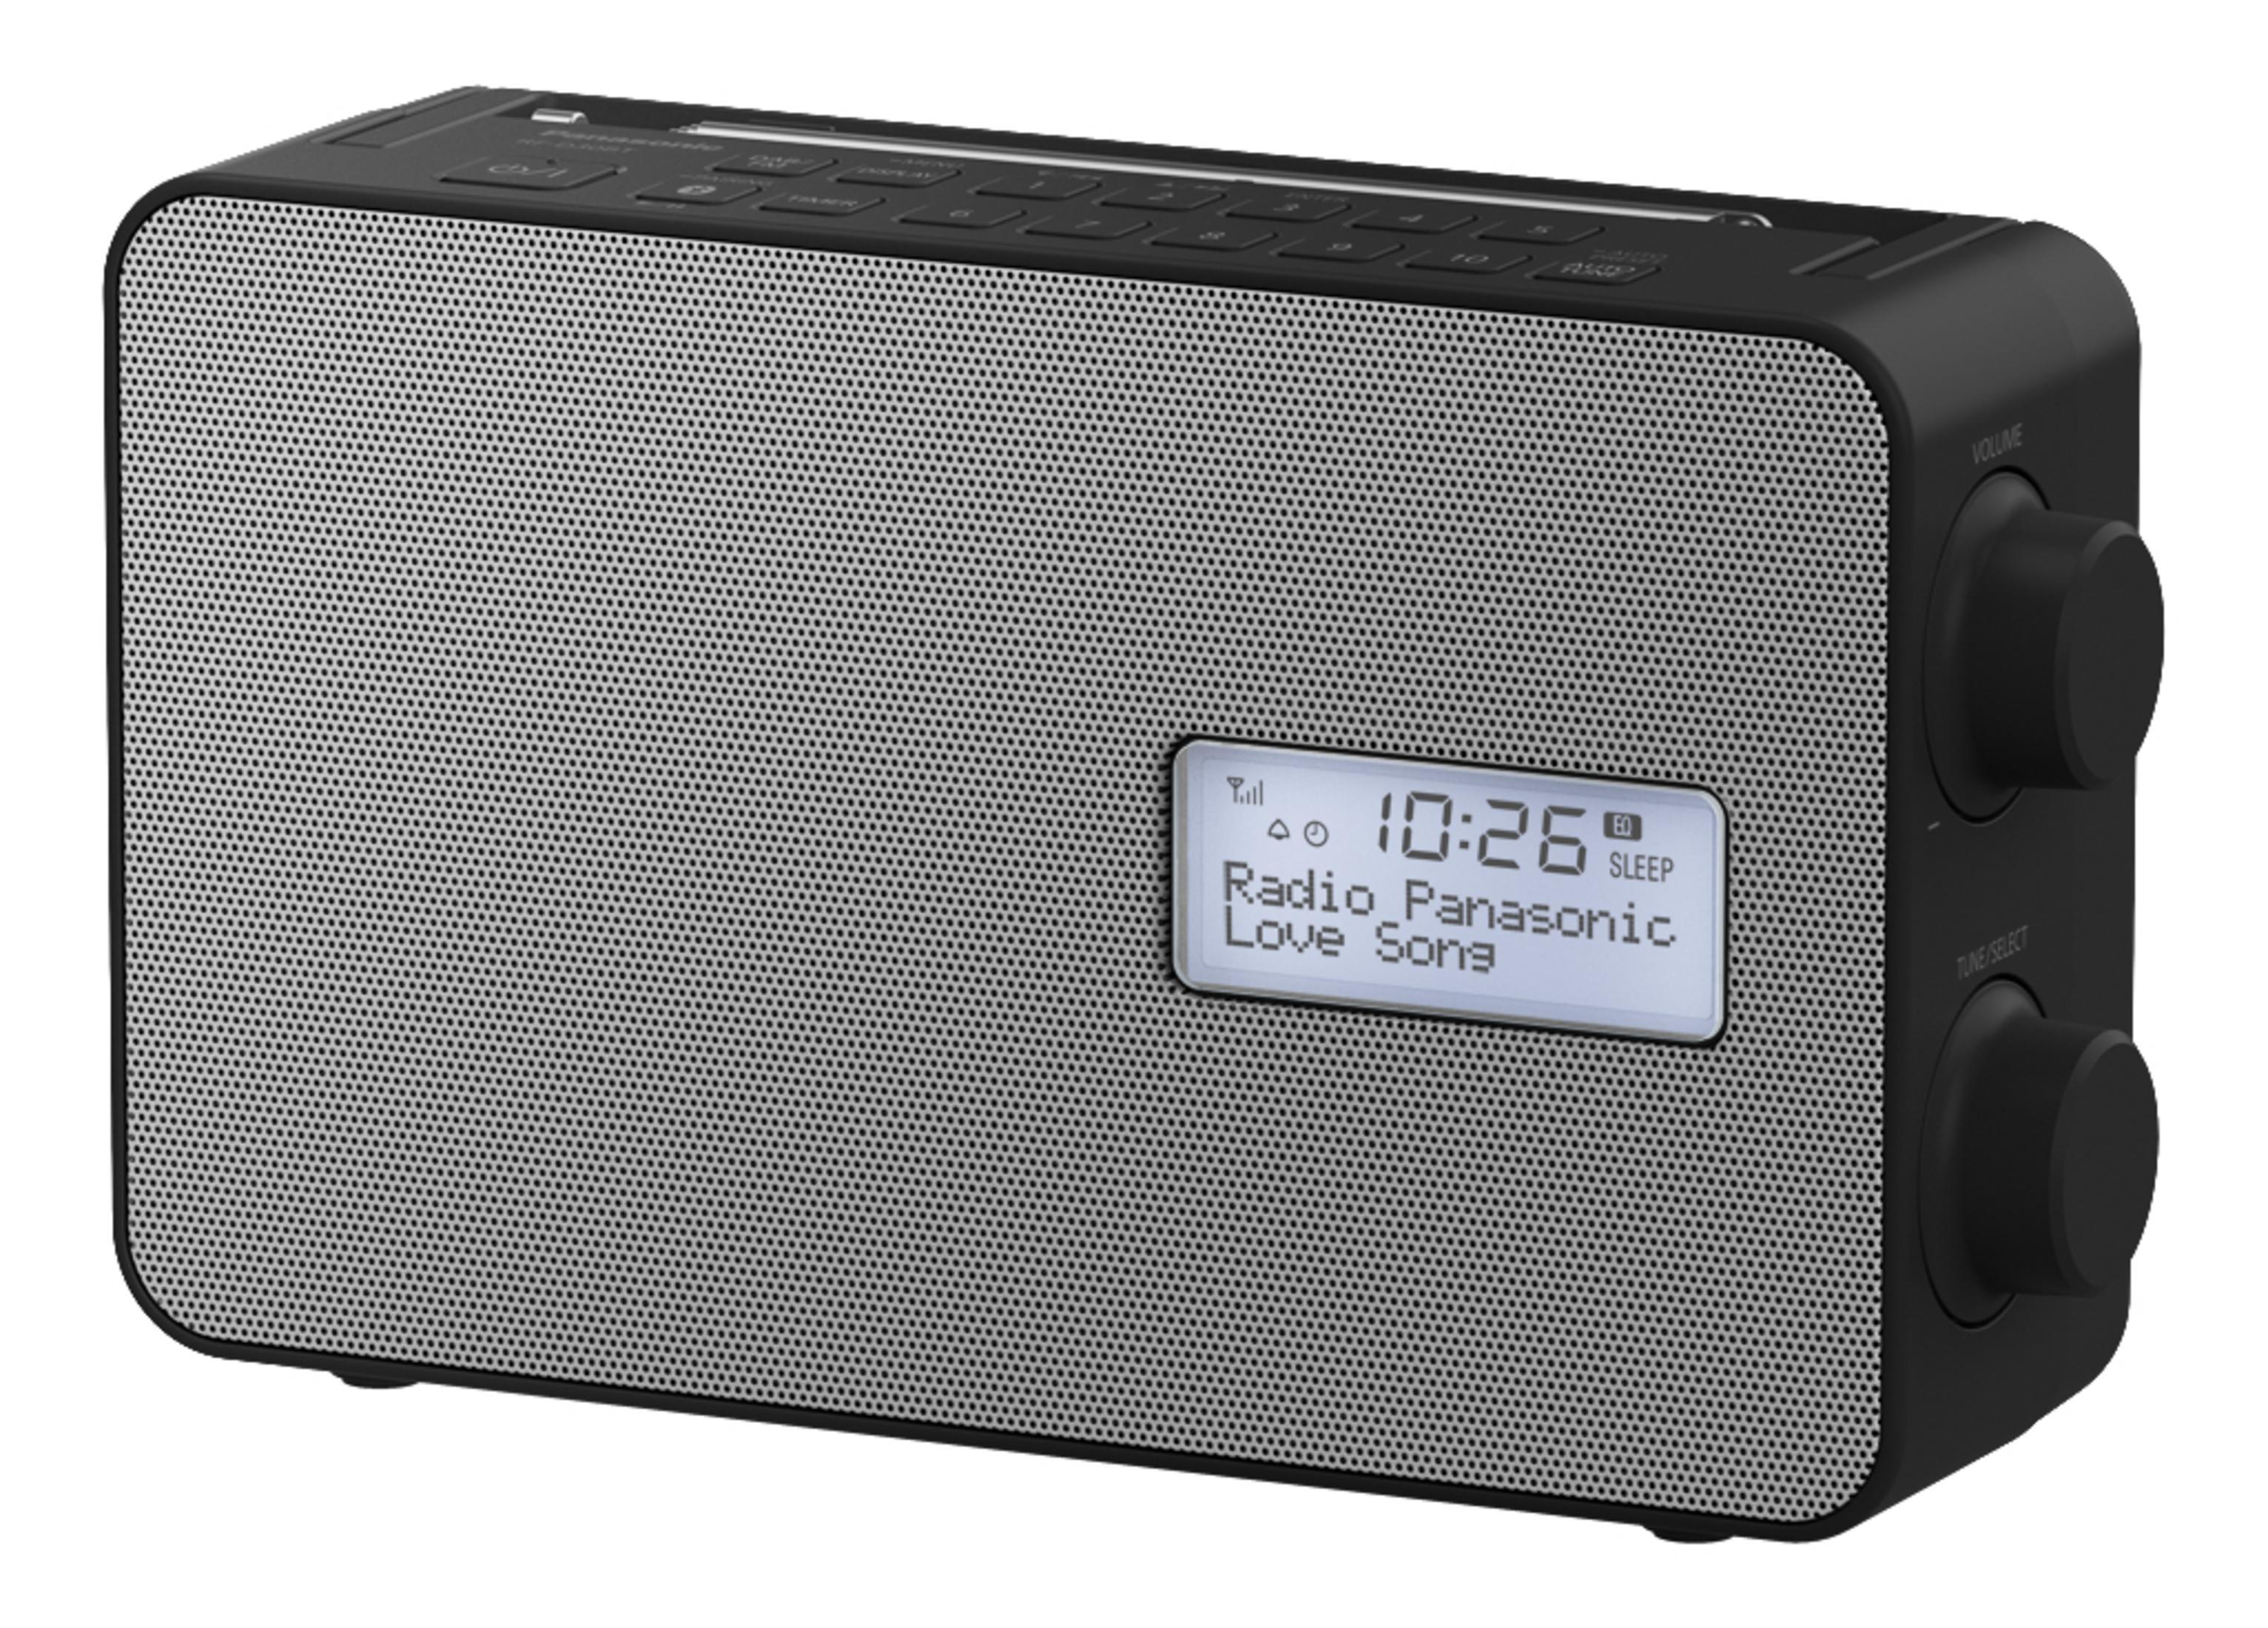 FM, DAB+ DAB+, Tuner/ mit Analog BTEG-K Schwarz/Silber 30 RF-D Bluetooth, Bluetooth, Tuner, Radio PANASONIC DAB+